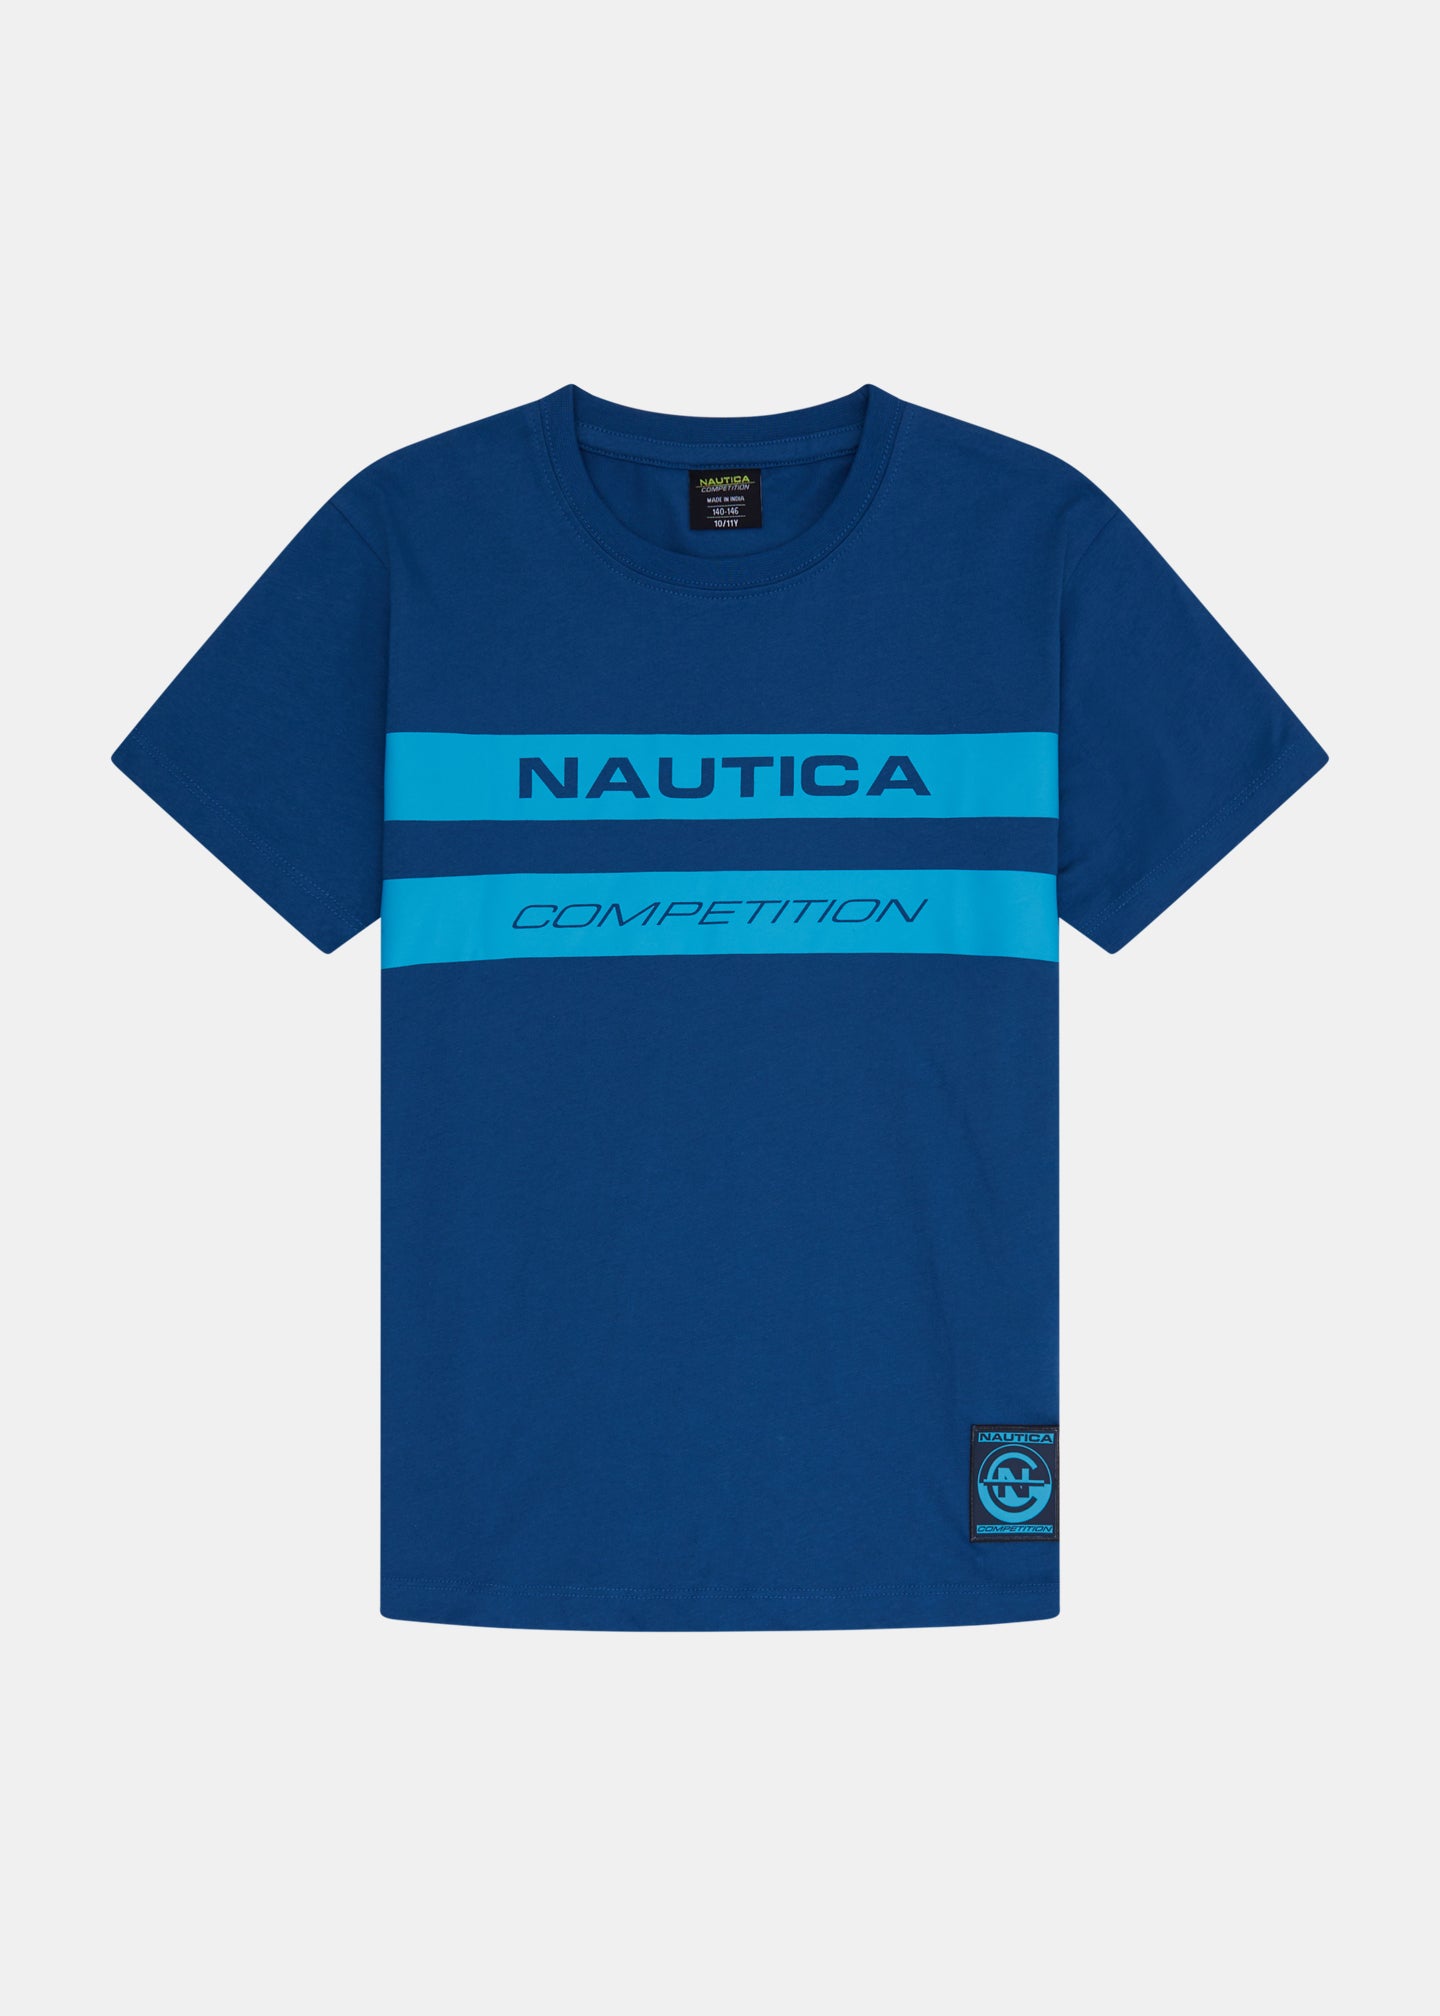 Nautica Competition Lorne T-Shirt Jnr - Dark Blue - Front